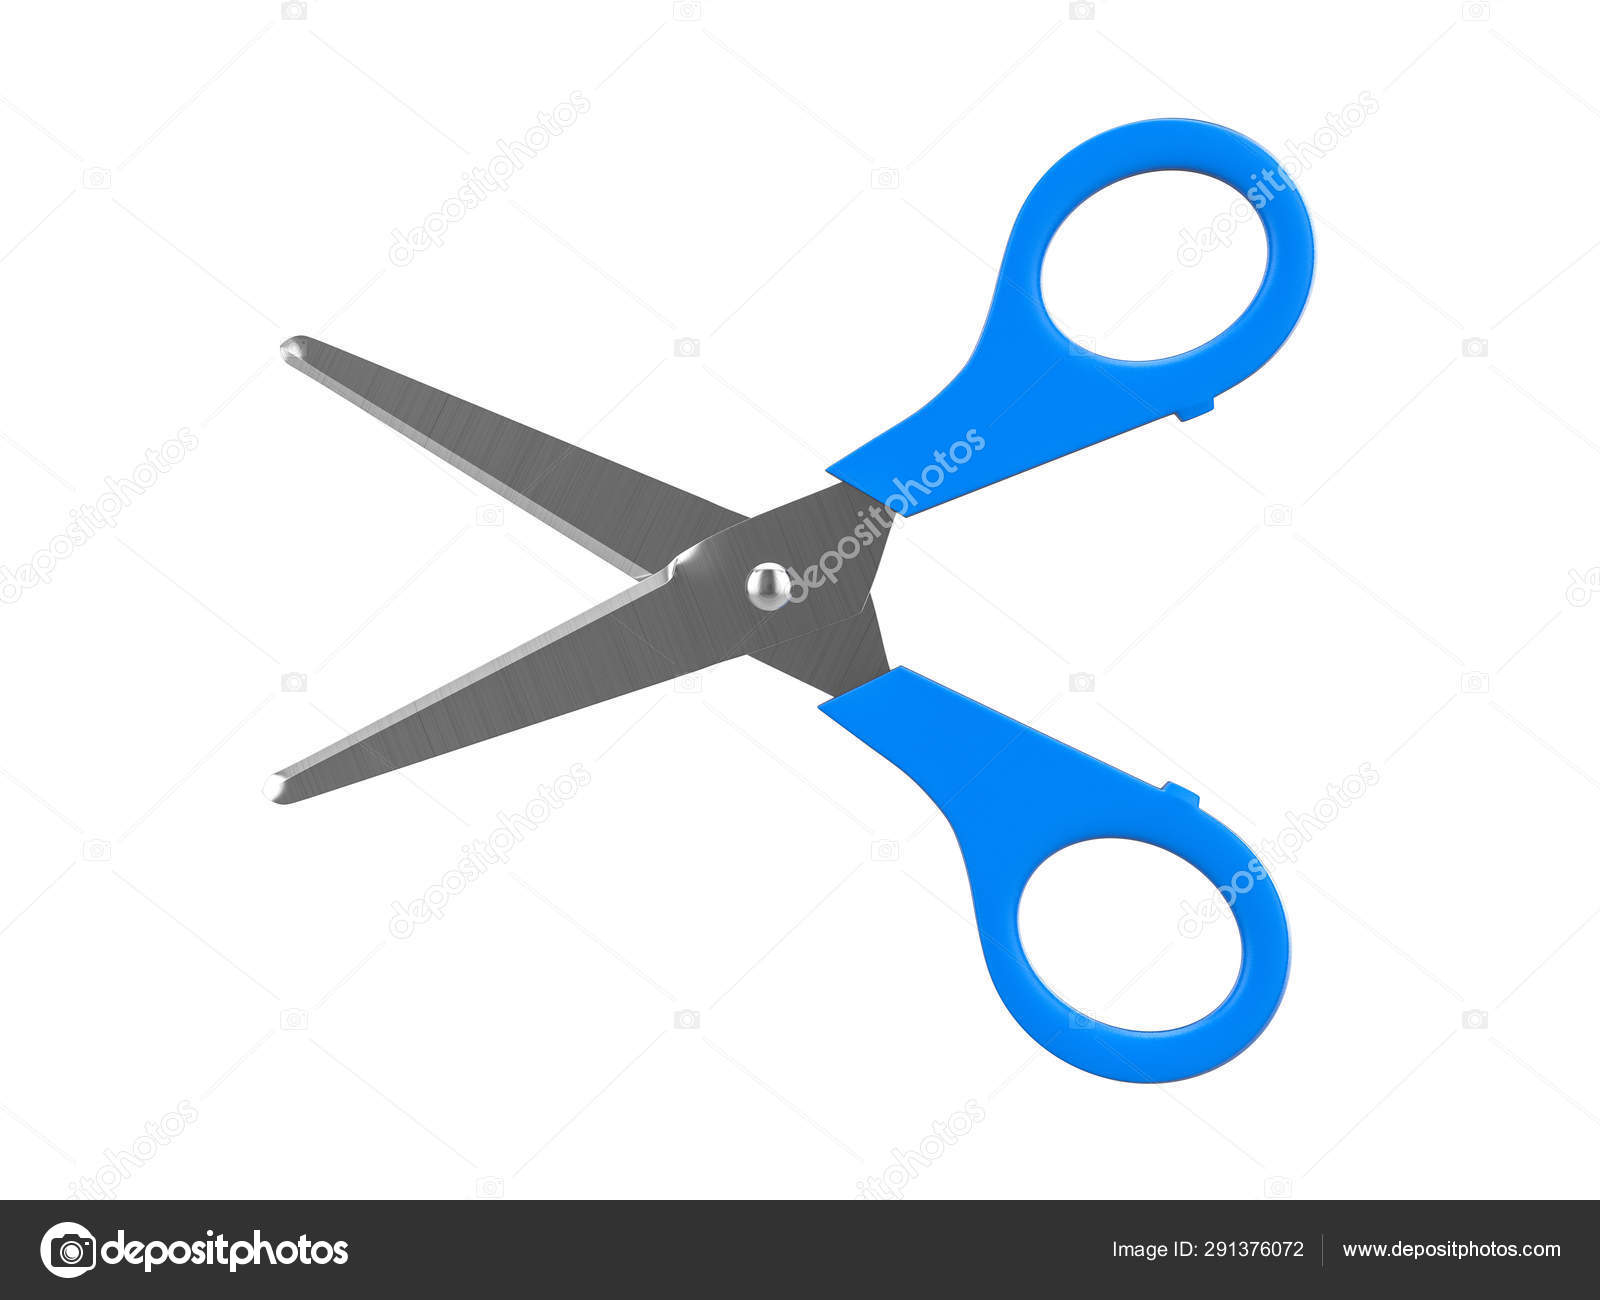 Scissors Stock Photo by ©julydfg 291376072